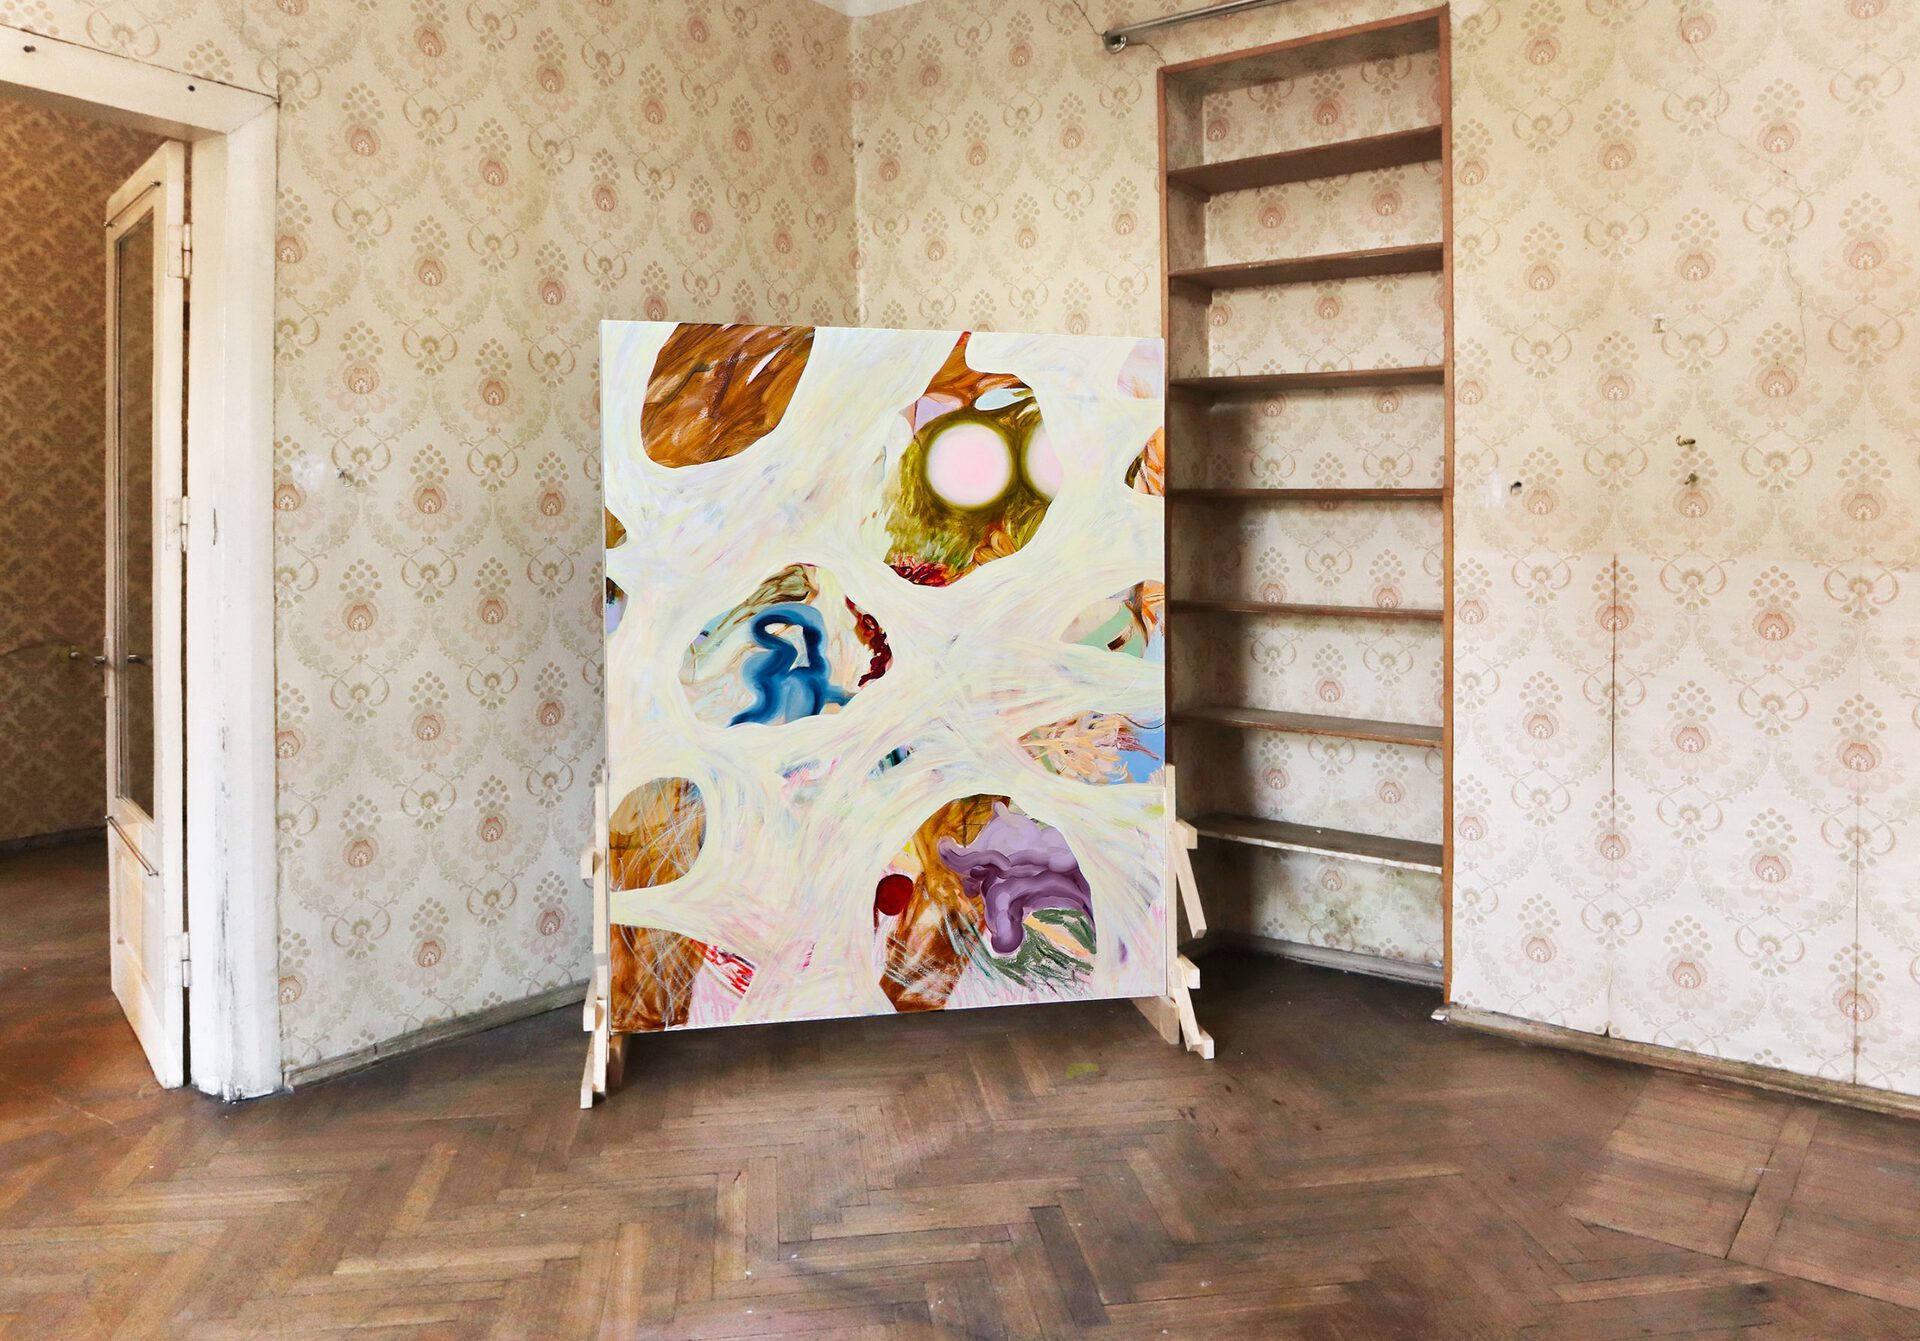 2. Nina Kintsurashvili, Untitled, 2022, pigment sticks, markers, oil on canvas, 180 x 160 cm